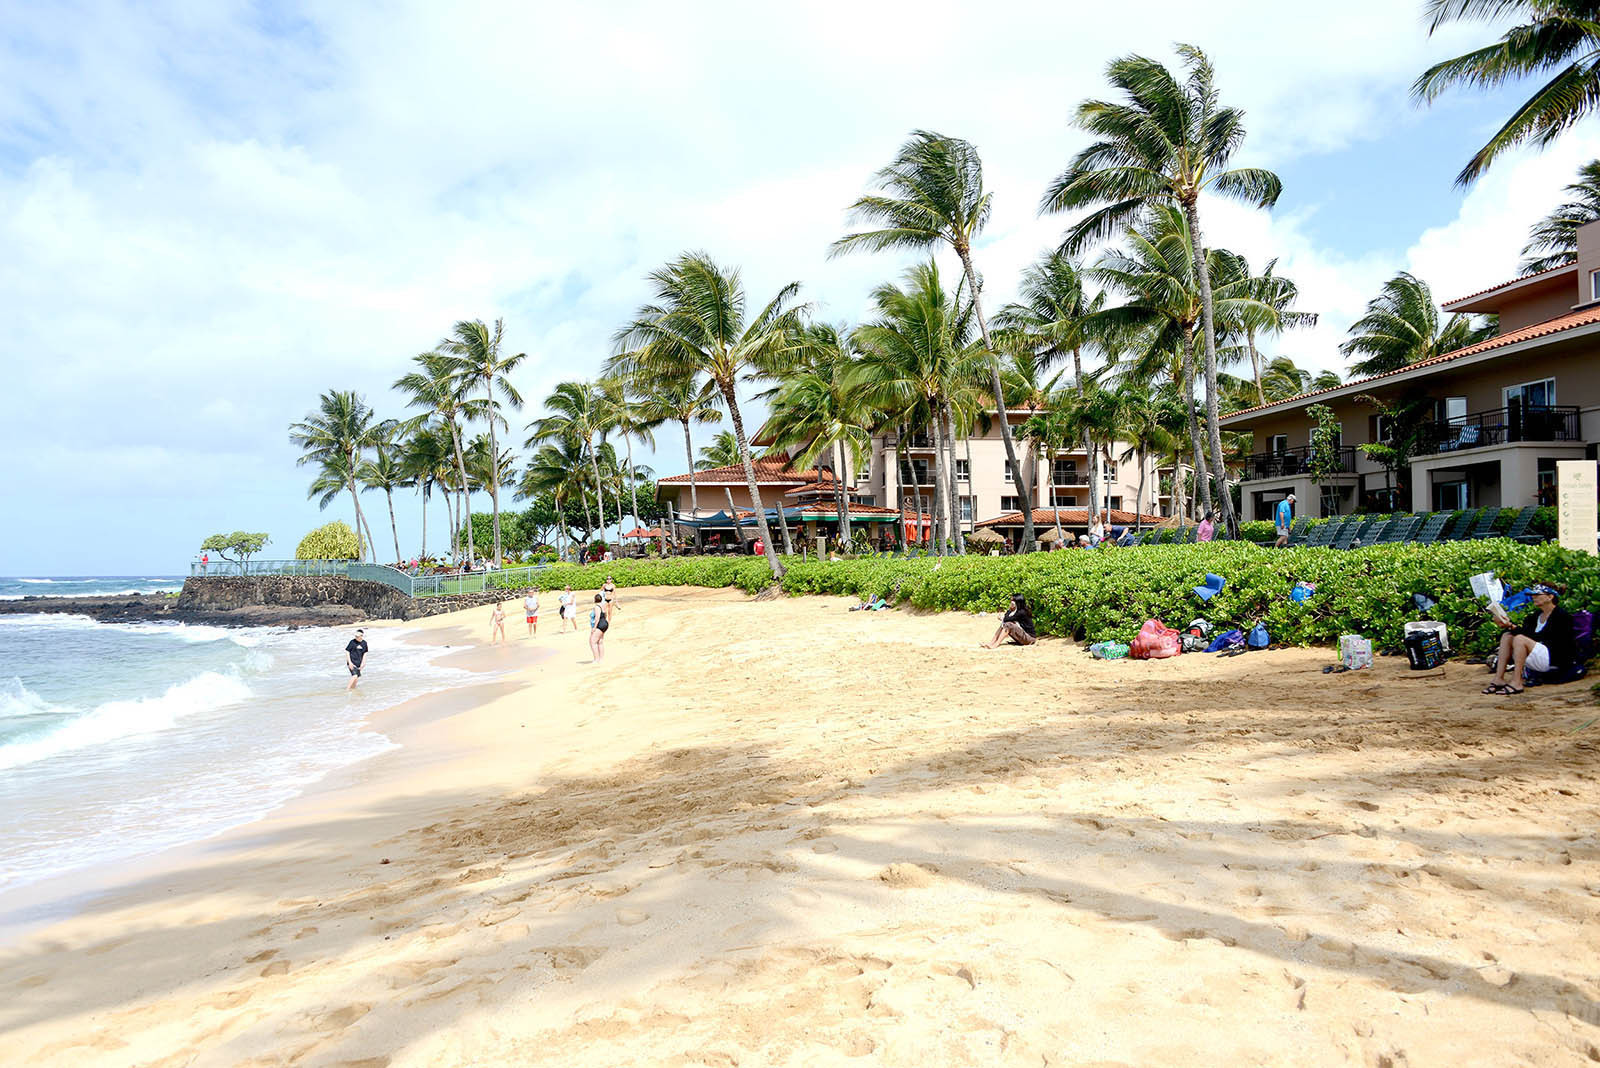 Marriott Waiohai Beach Club, Kauai timeshare resales